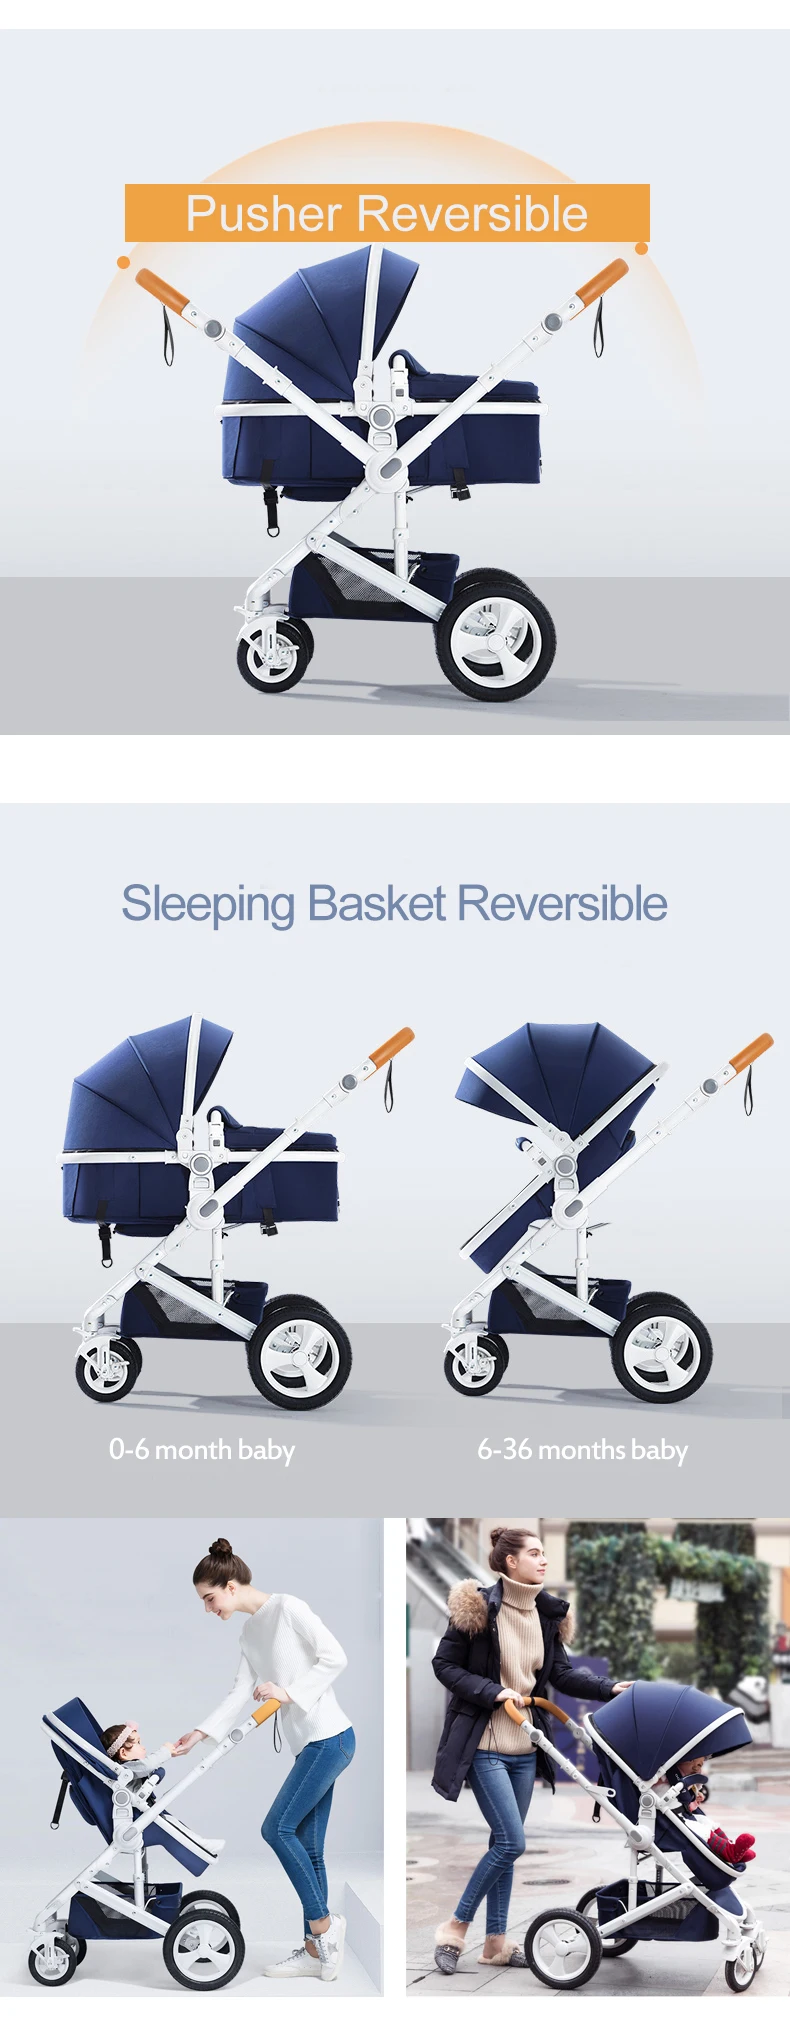 parabebe luxury baby stroller